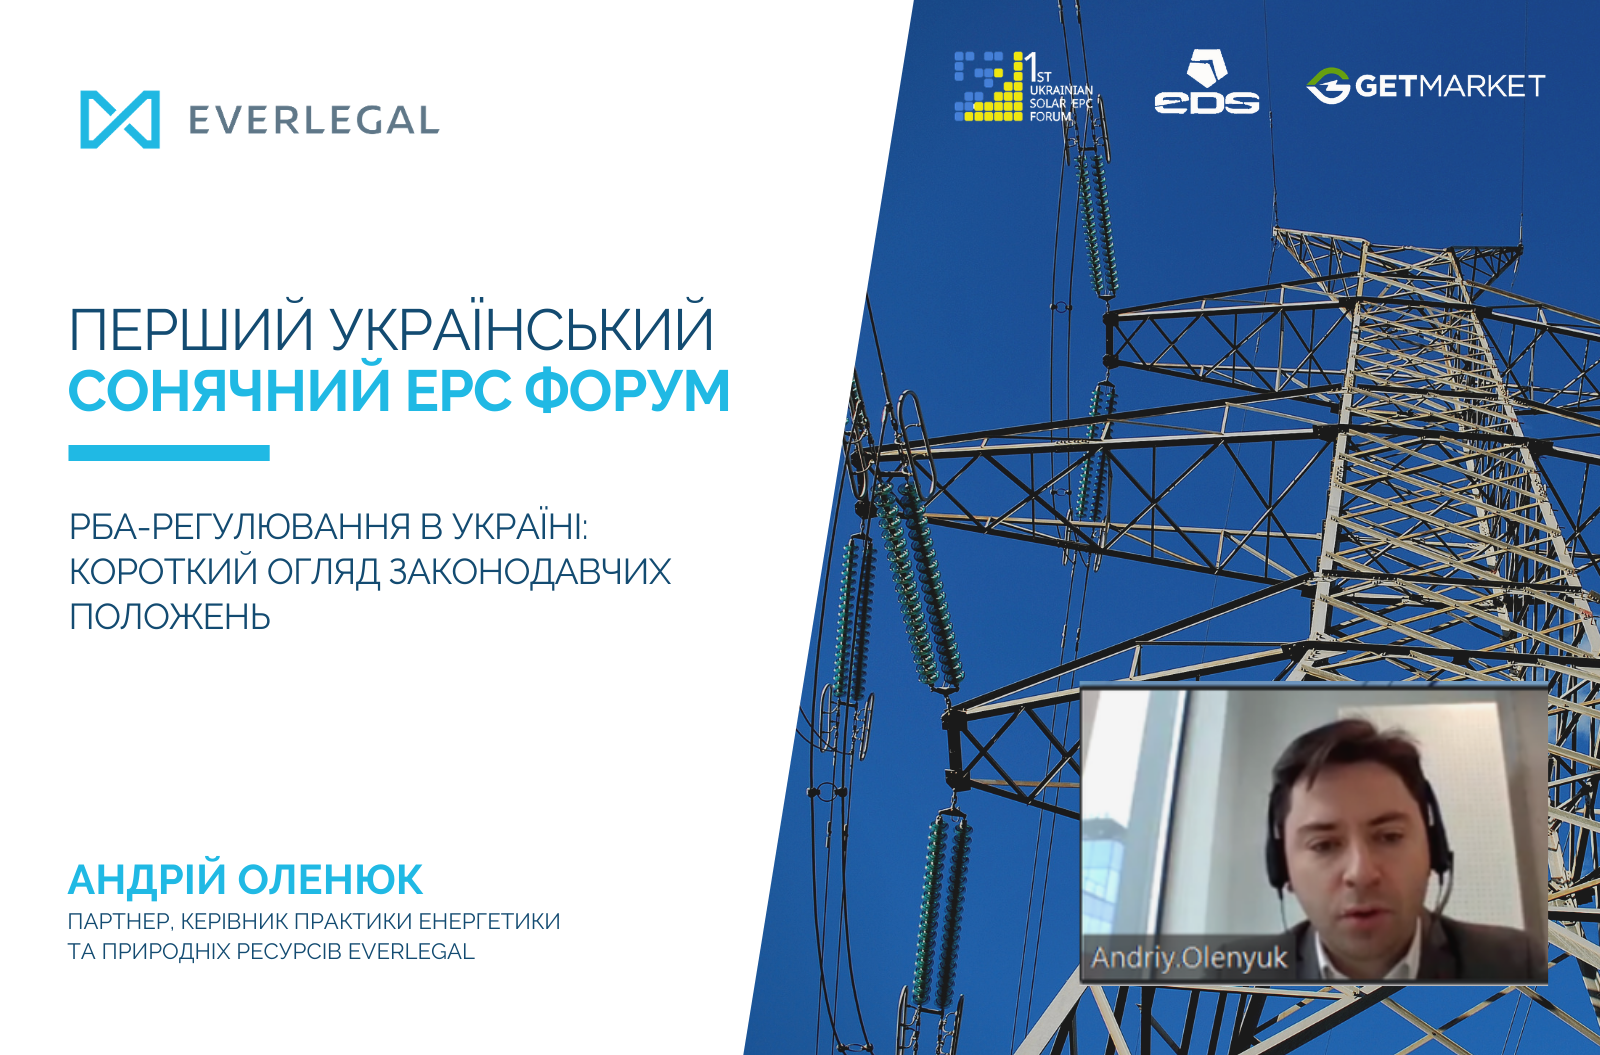 EVERLEGAL at First Ukrainian Solar EPC Forum